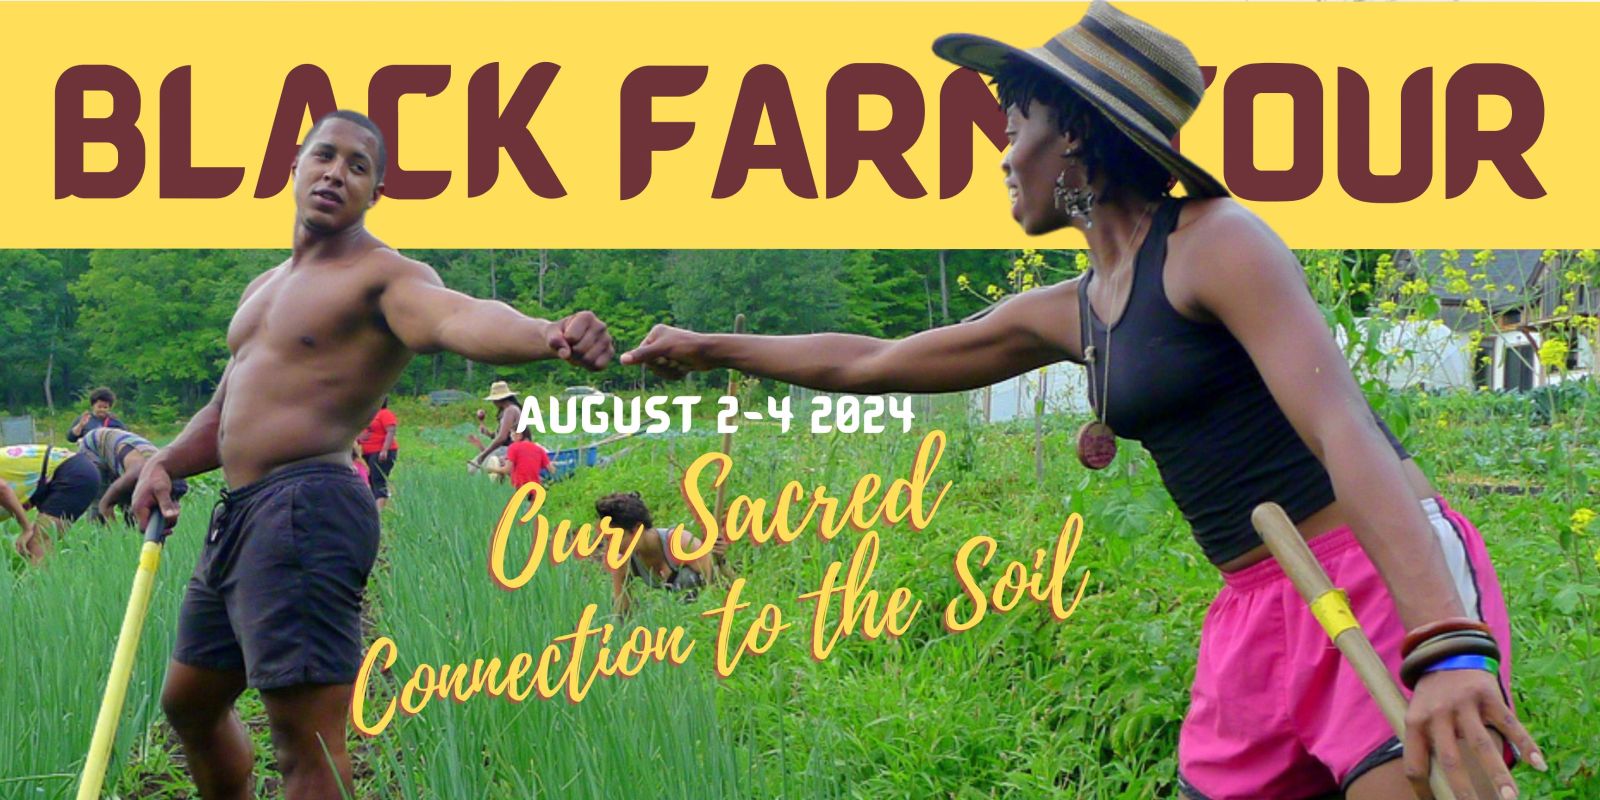 Black Farm Tour banner - man woman fist bumping in garden